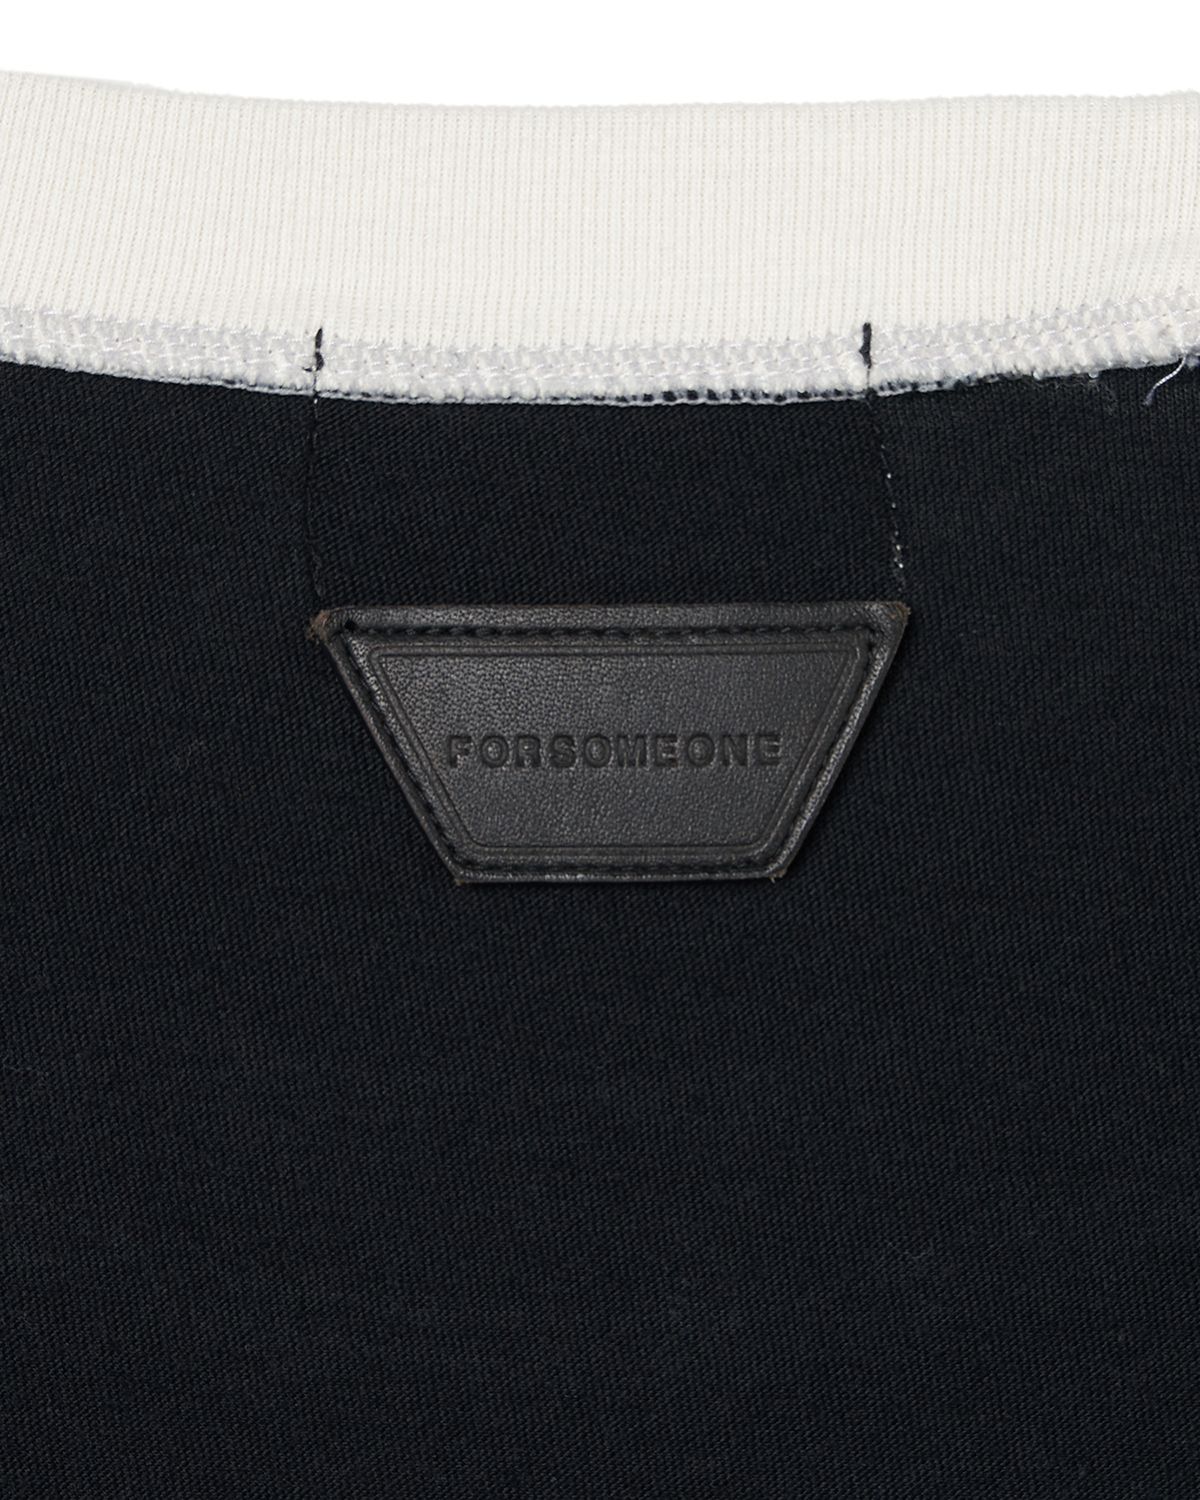 FORSOMEONE - INSIDEOUT FC TEE (BLACK) / Tシャツ ブラック | chord